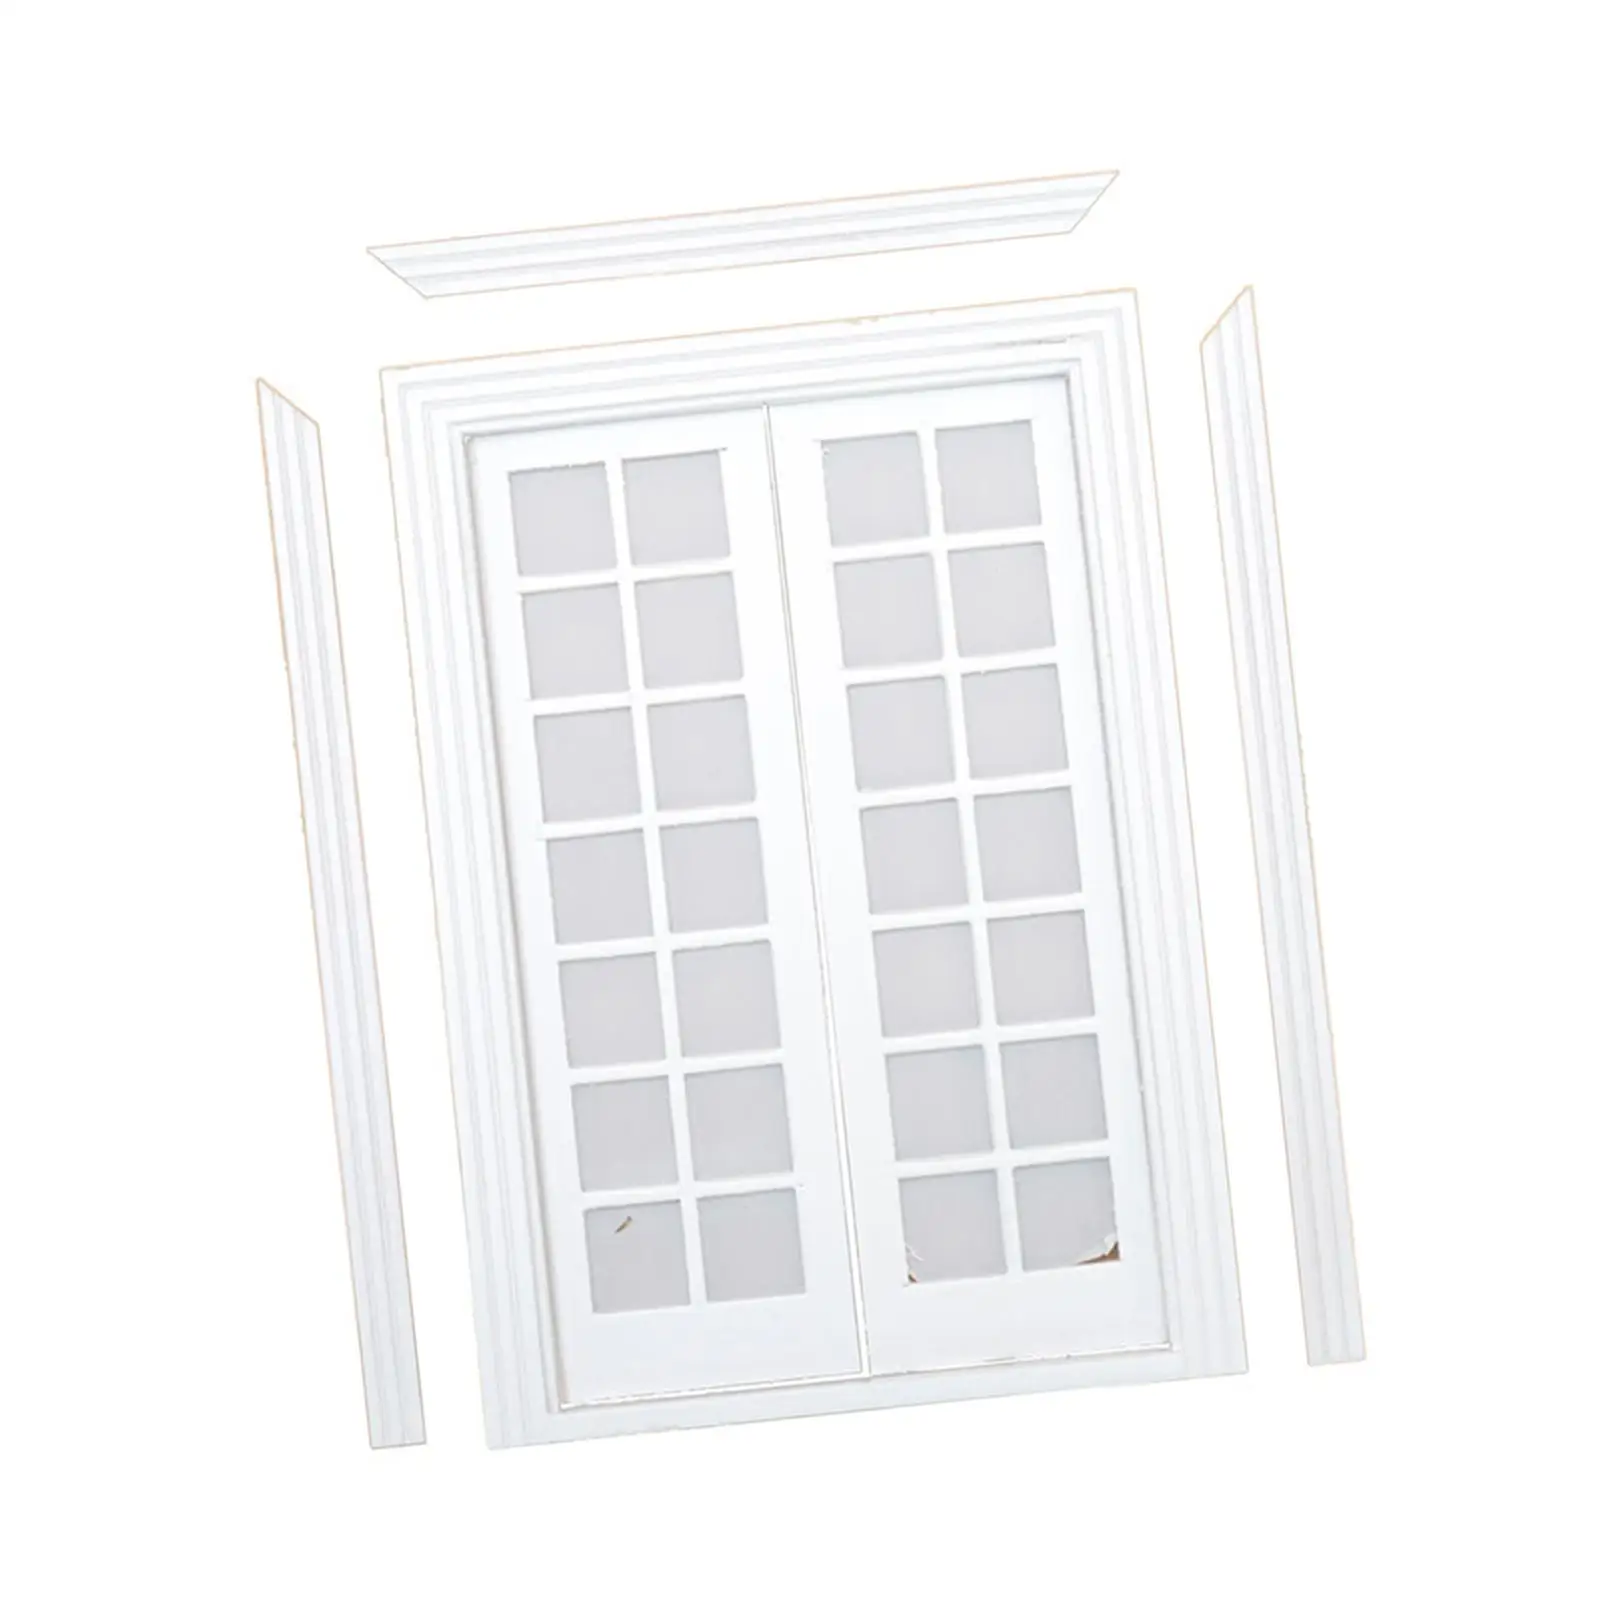 Double Open Dollhouse Door Photography Props DIY Accessory Pretend Play Simulation Miniature Door for Window Display Handcraft